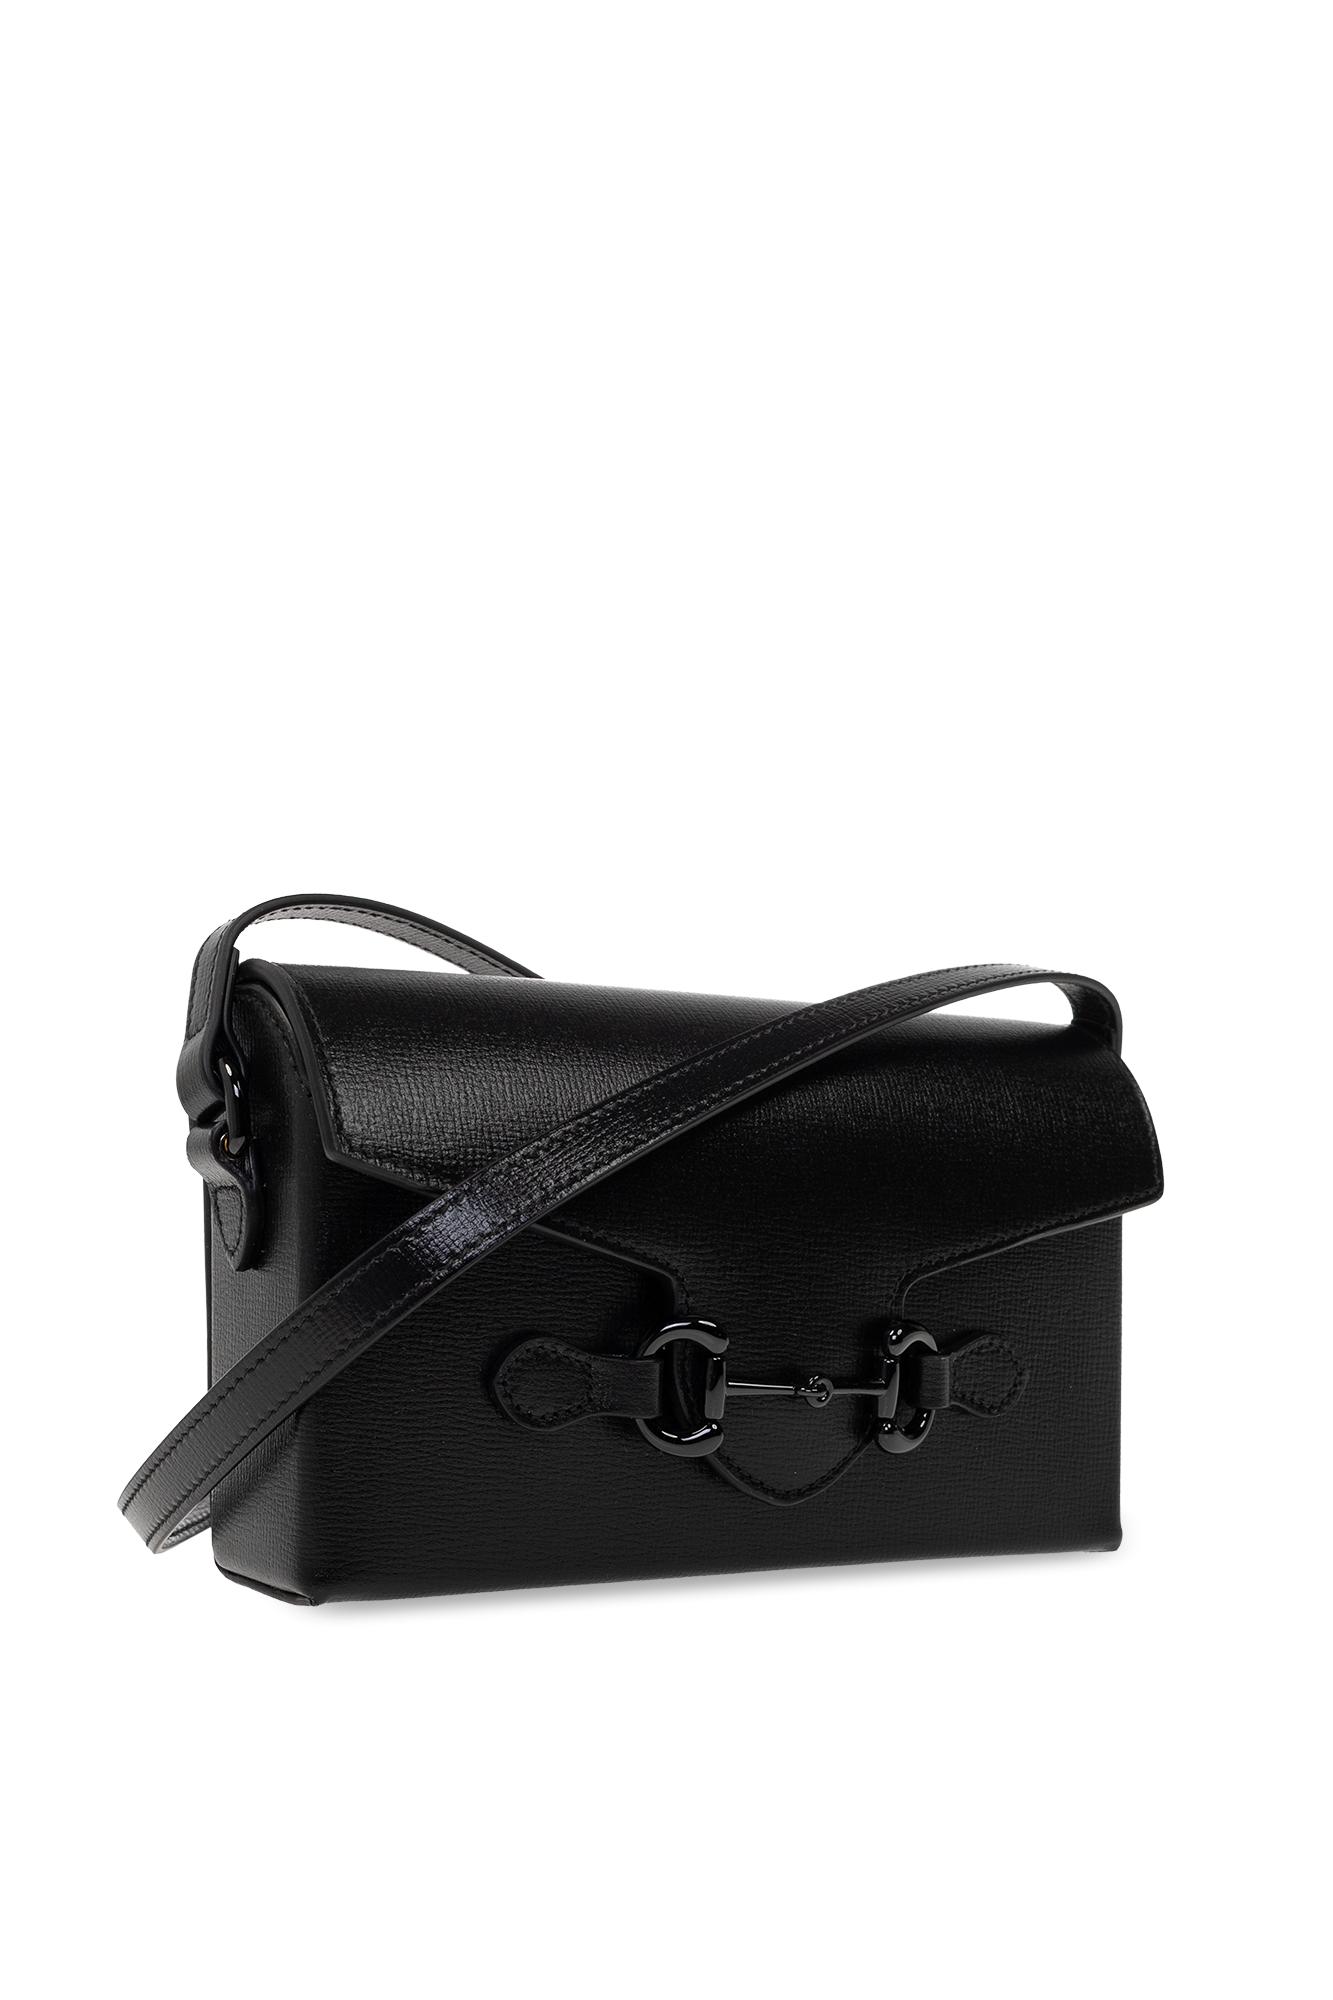 Gucci Horsebit 1955 Mini Rounded Bag in Black